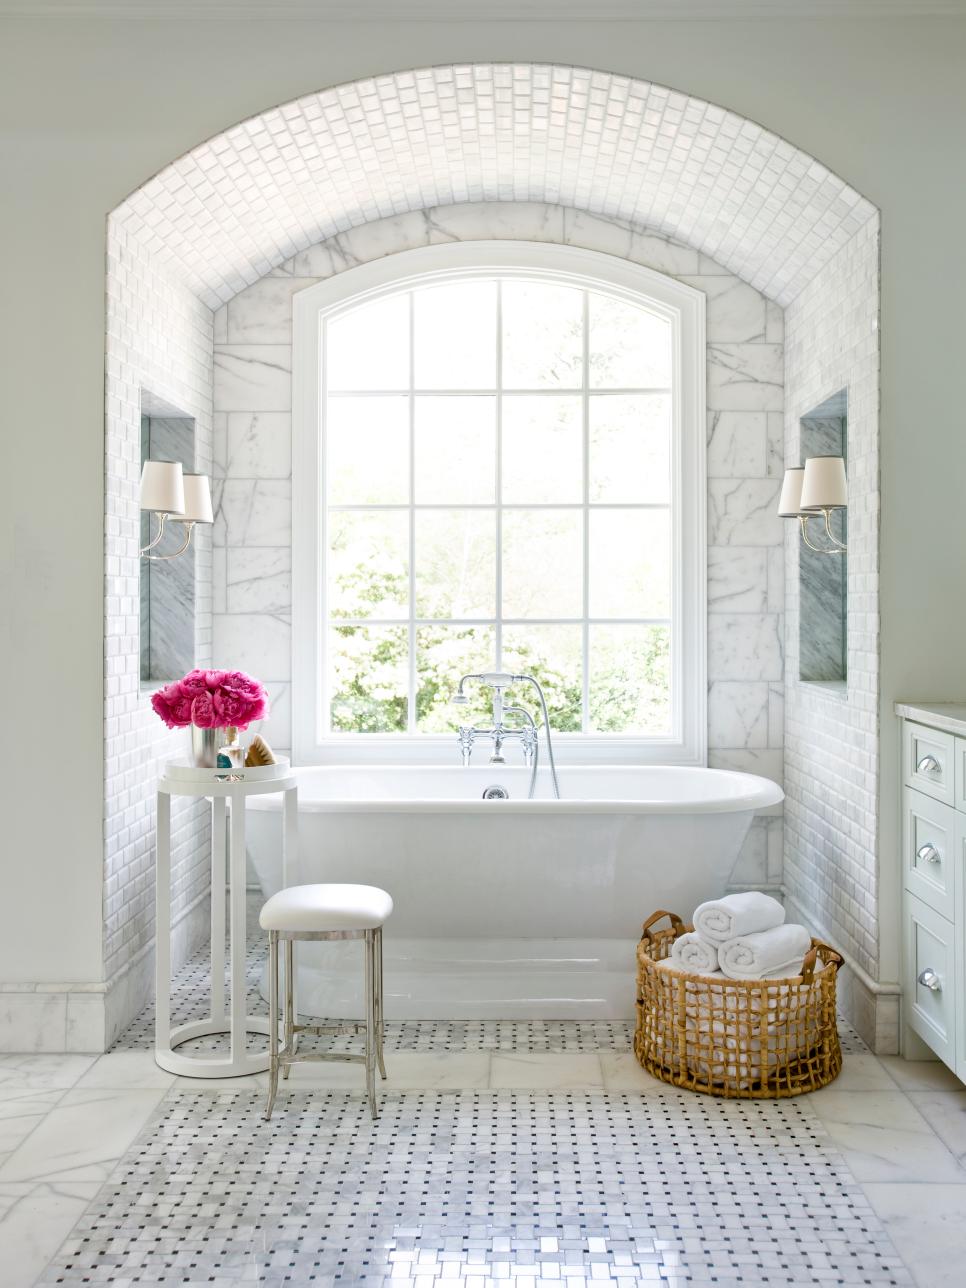 15 Simply Chic Bathroom Tile Design Ideas | HGTV